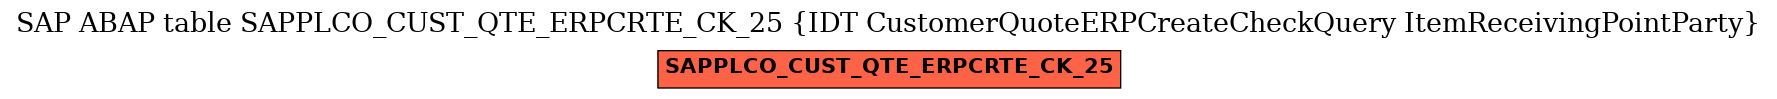 E-R Diagram for table SAPPLCO_CUST_QTE_ERPCRTE_CK_25 (IDT CustomerQuoteERPCreateCheckQuery ItemReceivingPointParty)